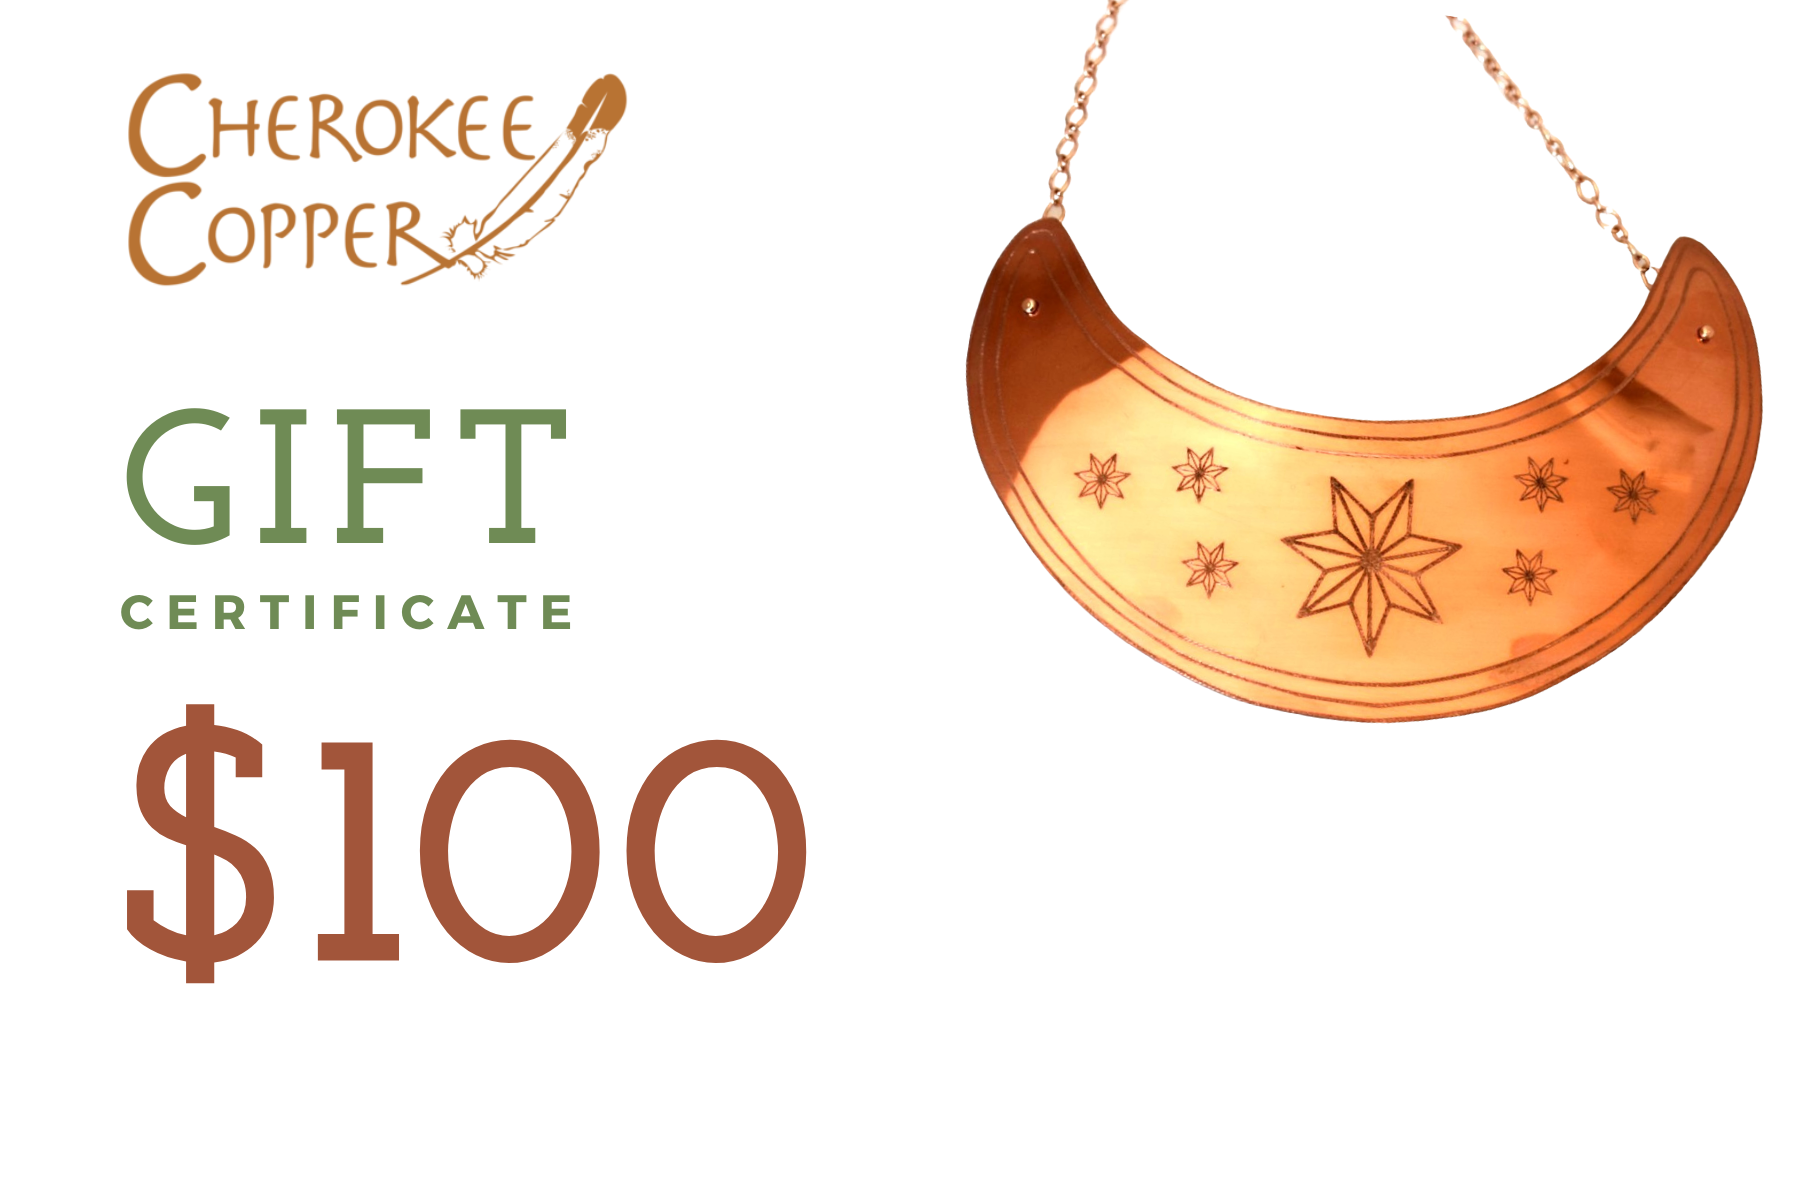 Cherokee Copper Gift Certificate $100